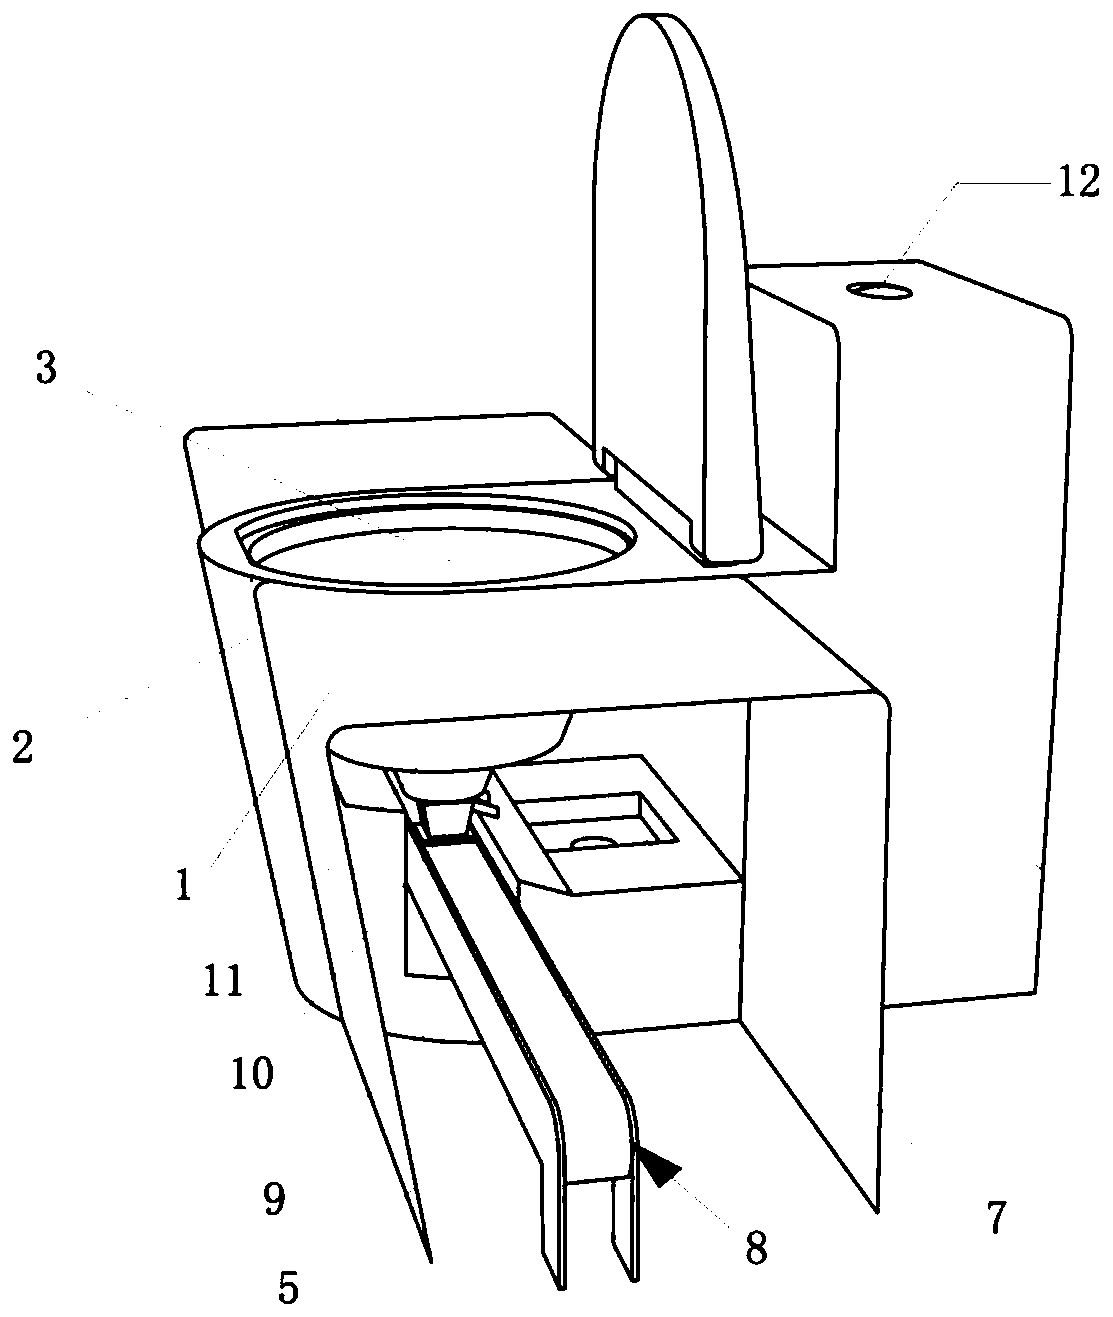 Closestool type urine detection sampling device